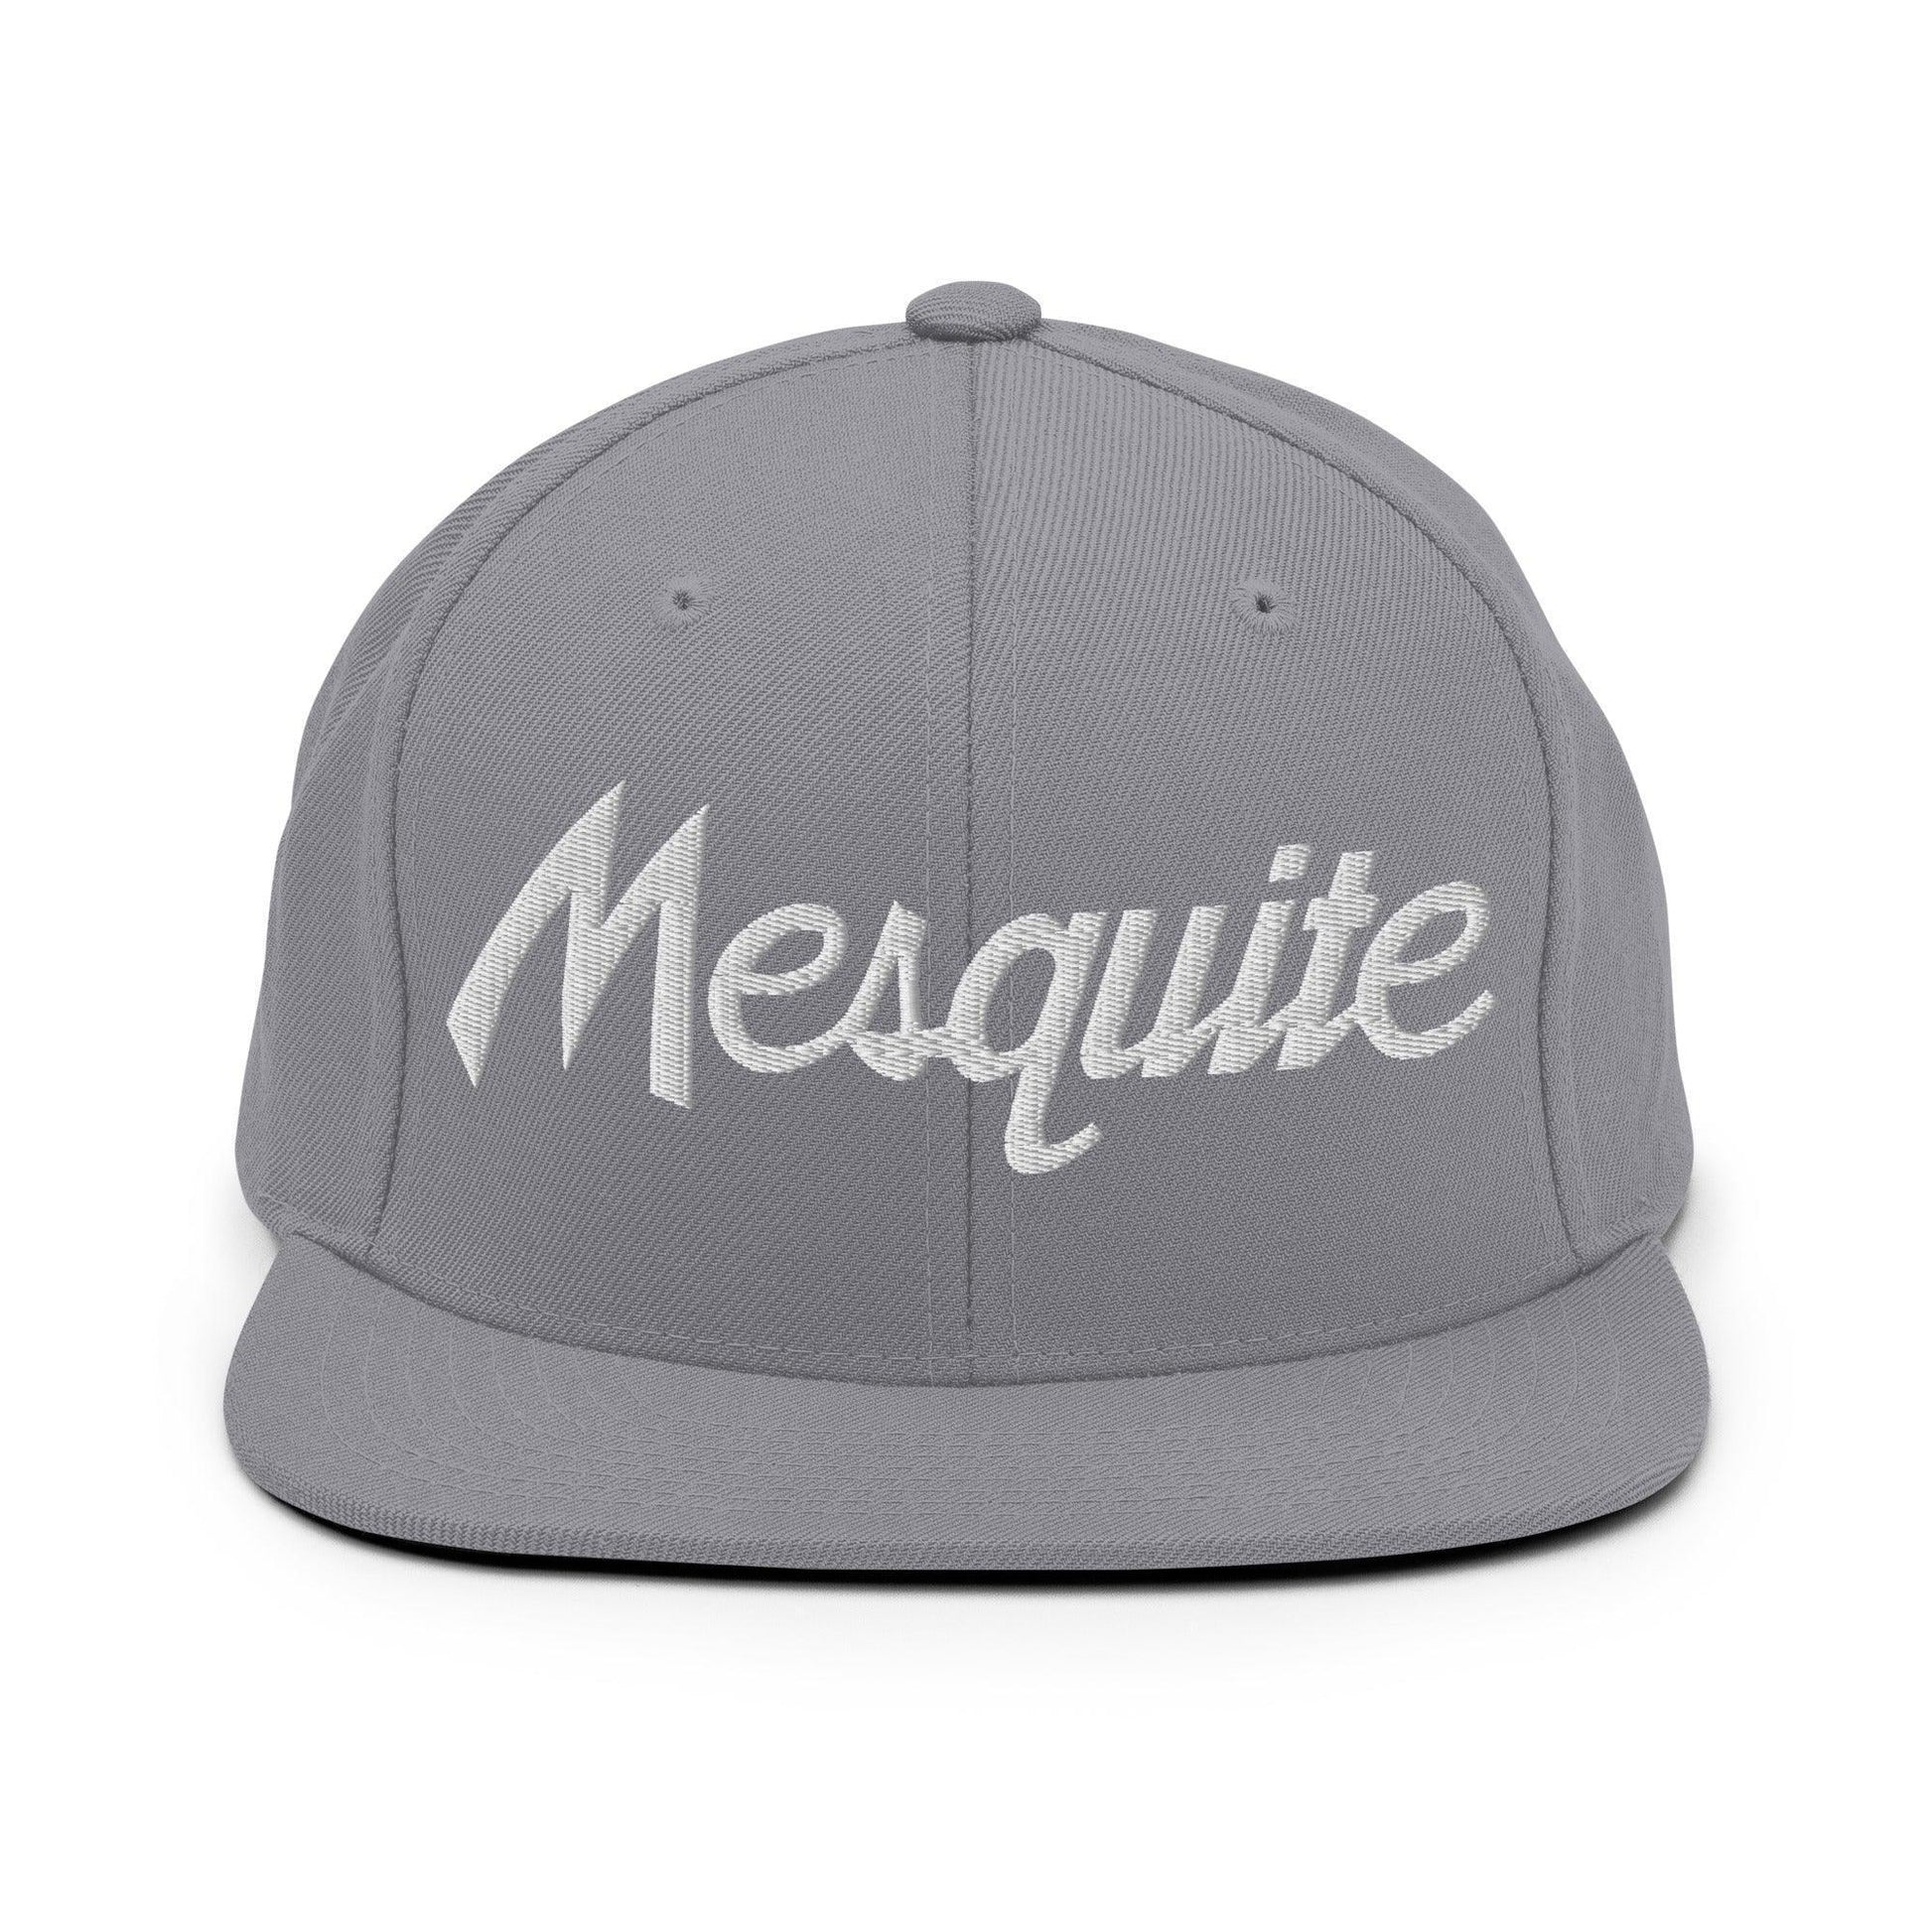 Mesquite Script Snapback Hat Silver